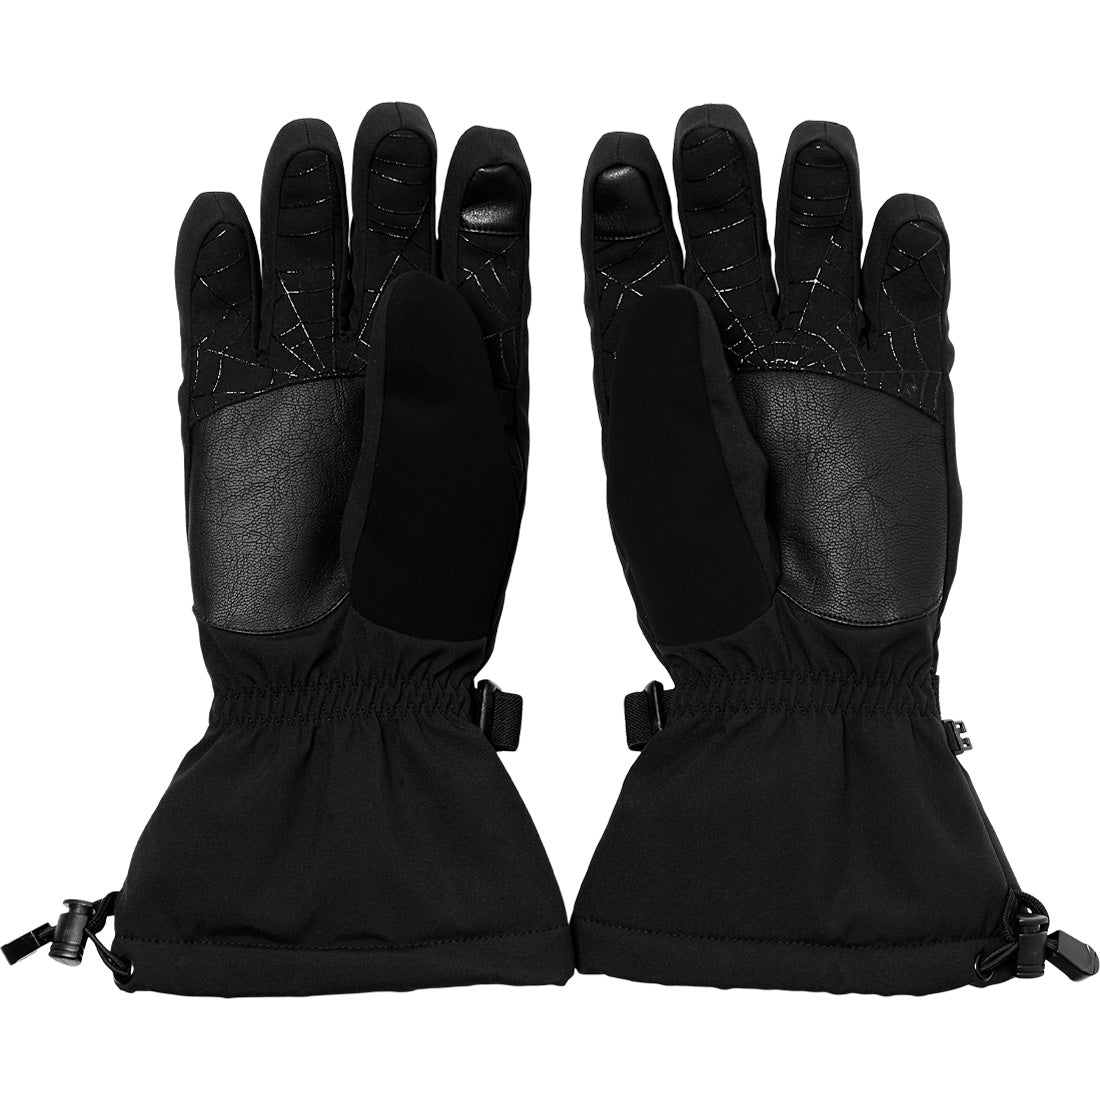 Spyder Crucial Glove - Men's